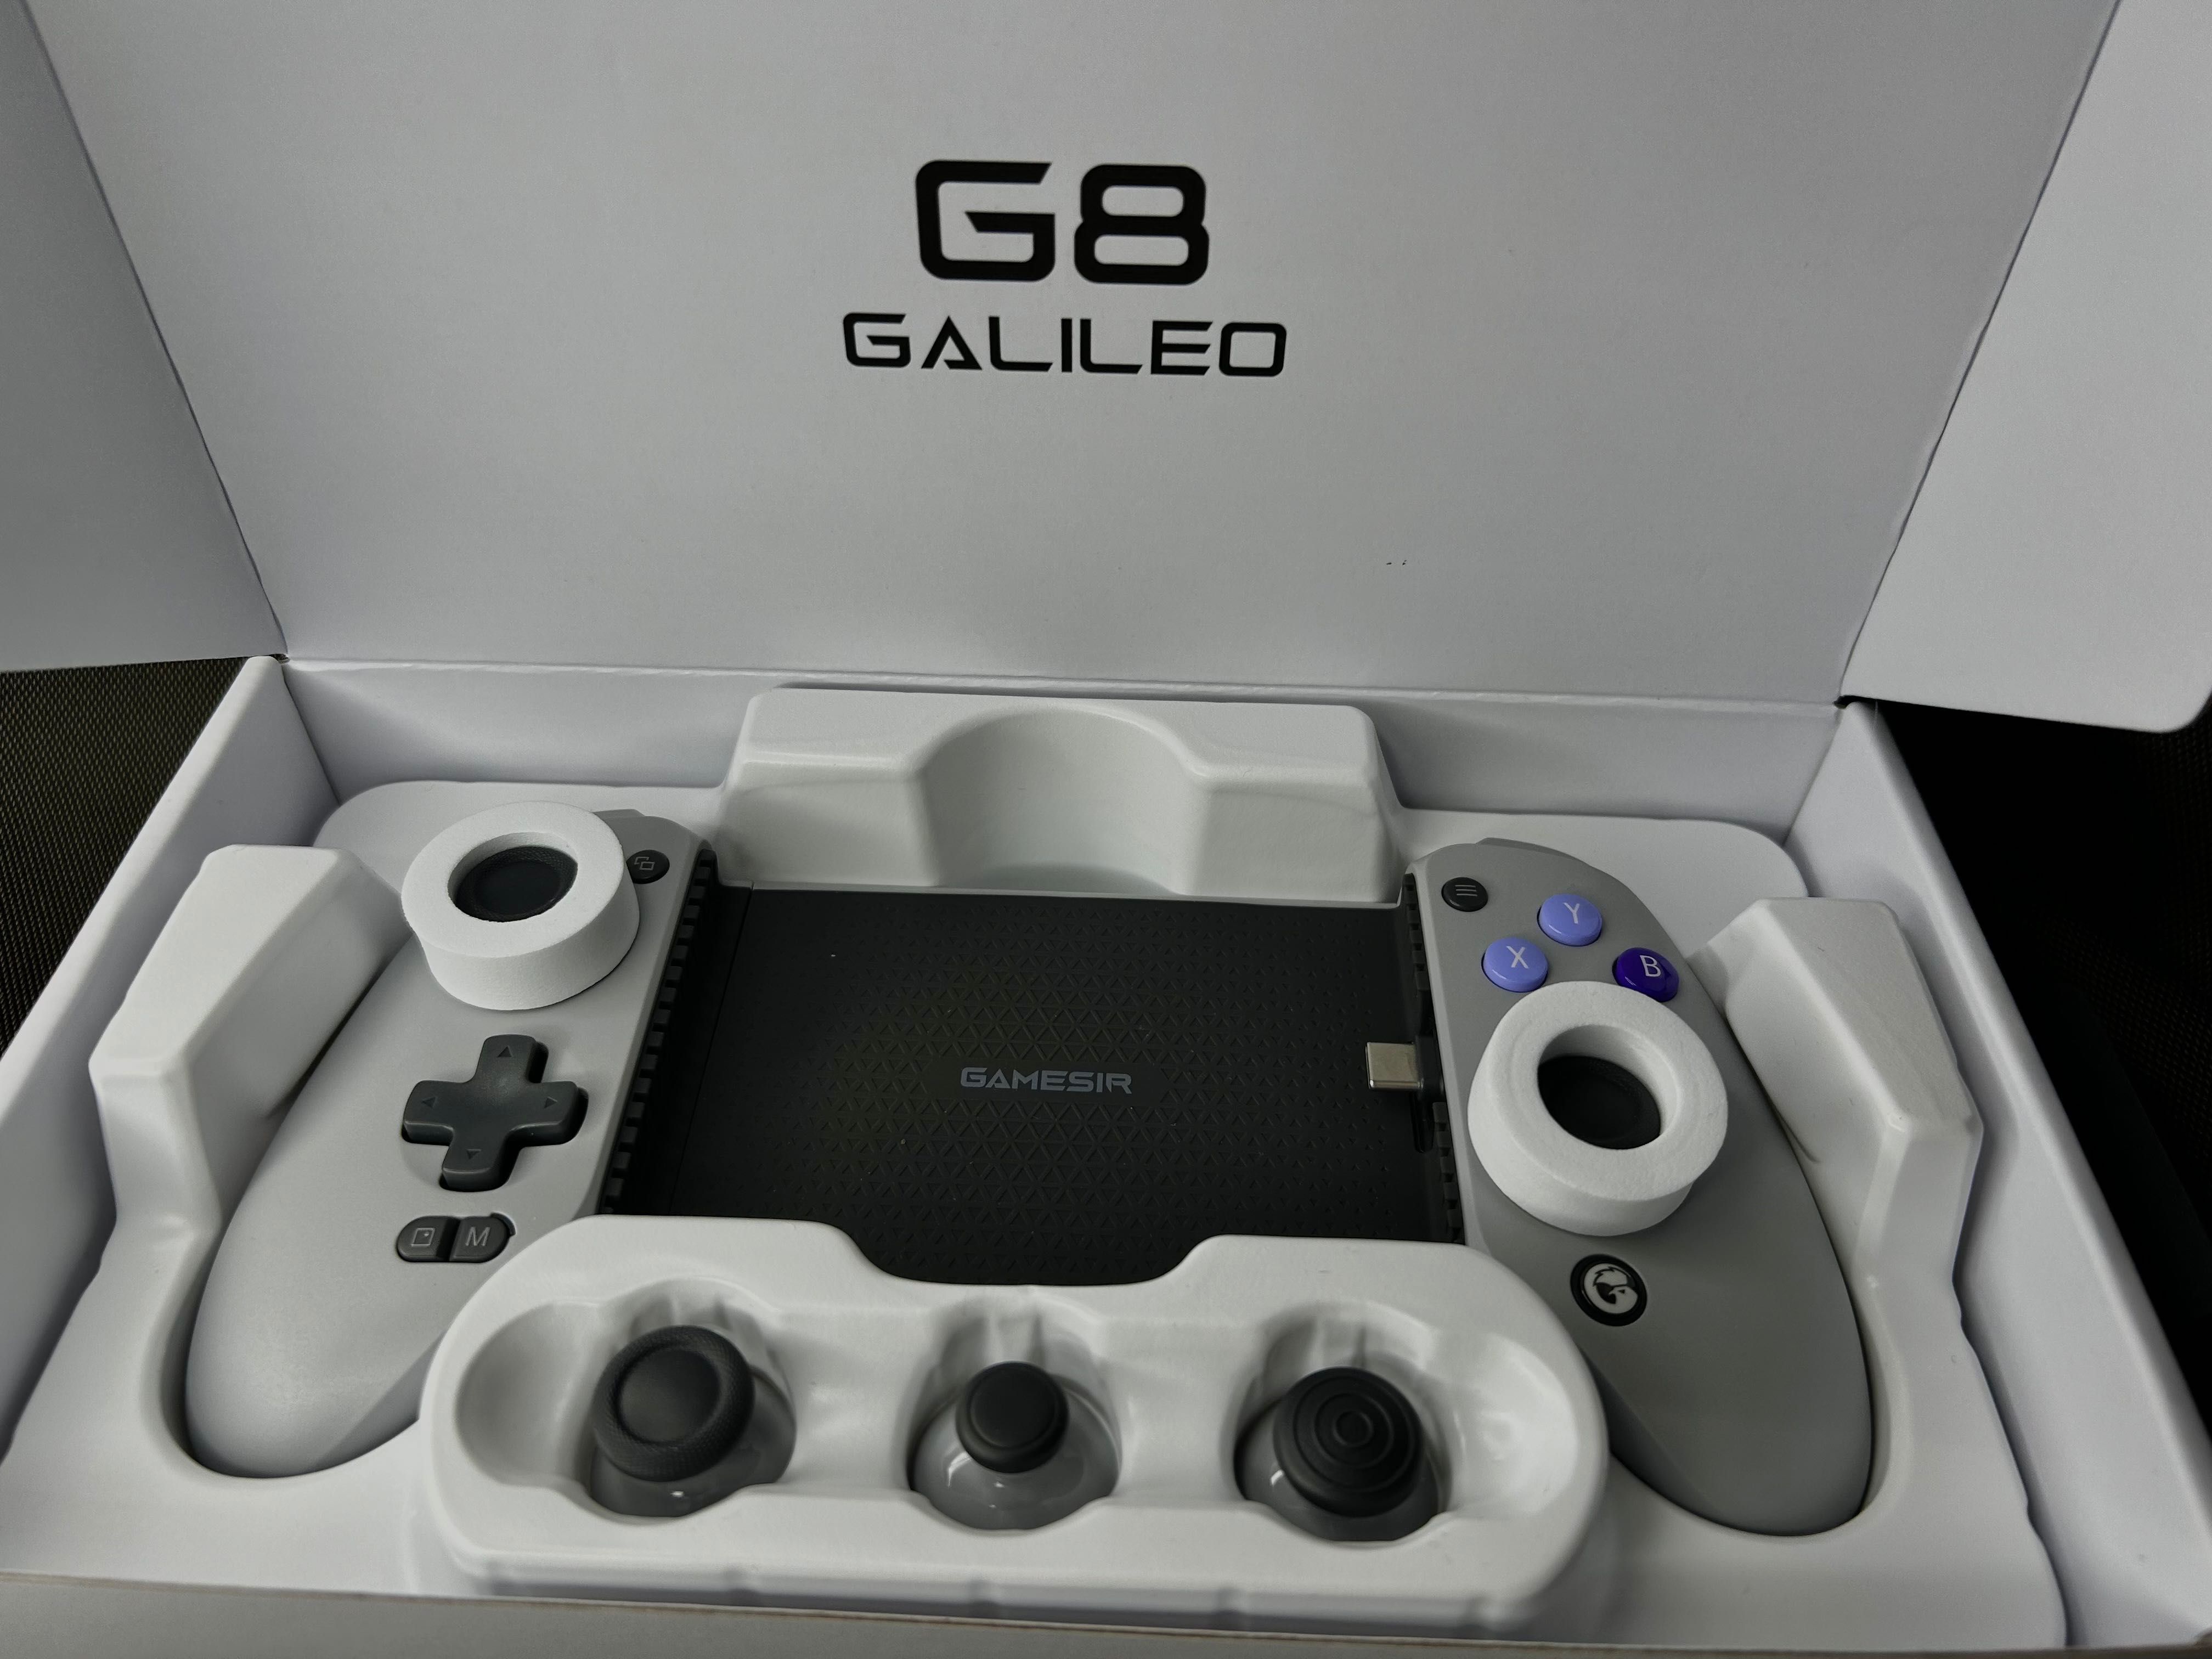 Геймпад GameSir G8 Galileo